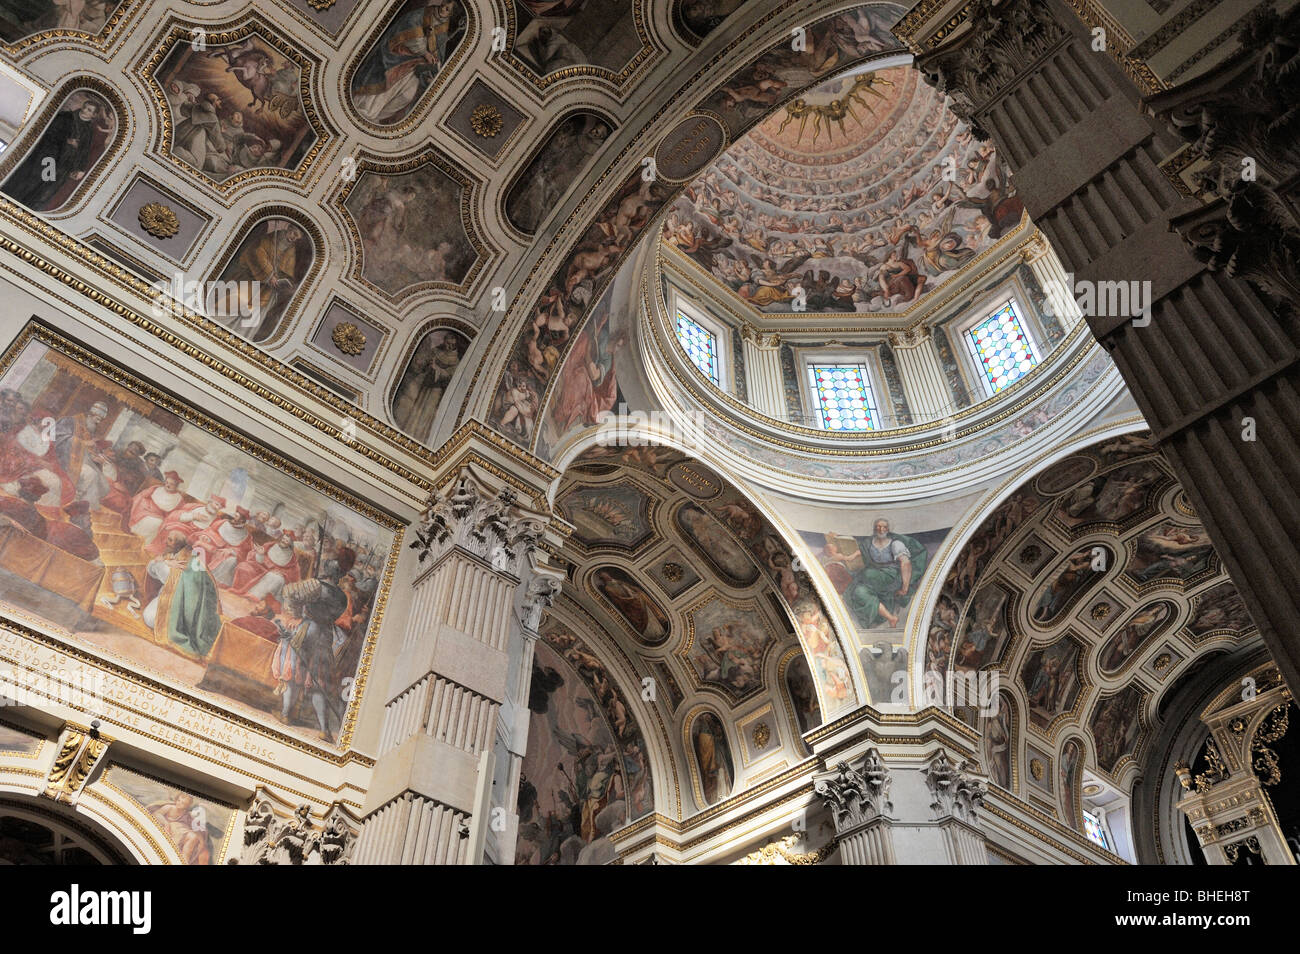 The Duomo di Mantova. Late Renaissance cathedral interior by Giulio Romano. Mediaeval Italian city of Mantua, Lombardy Italy. Stock Photo